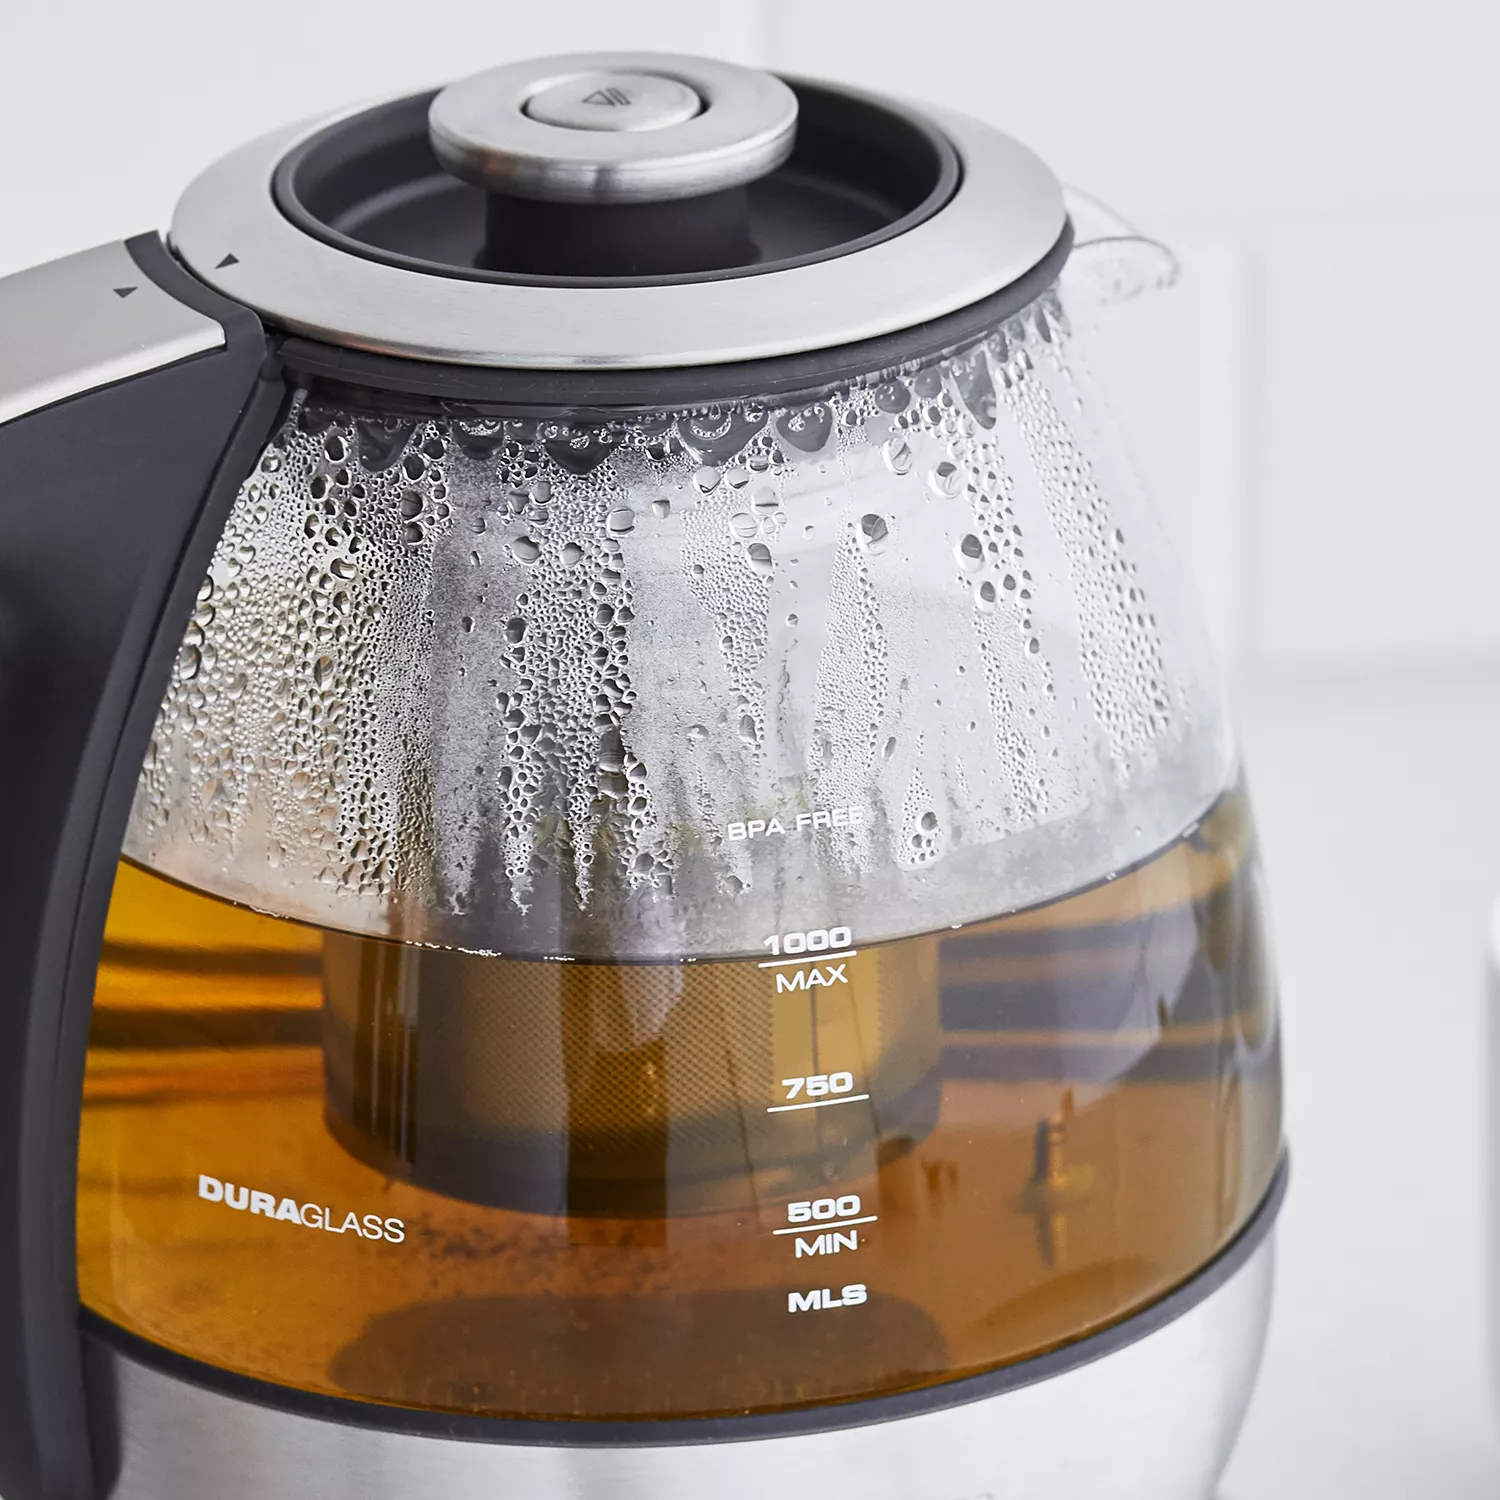 Smart Tea Infuser Compact, Breville